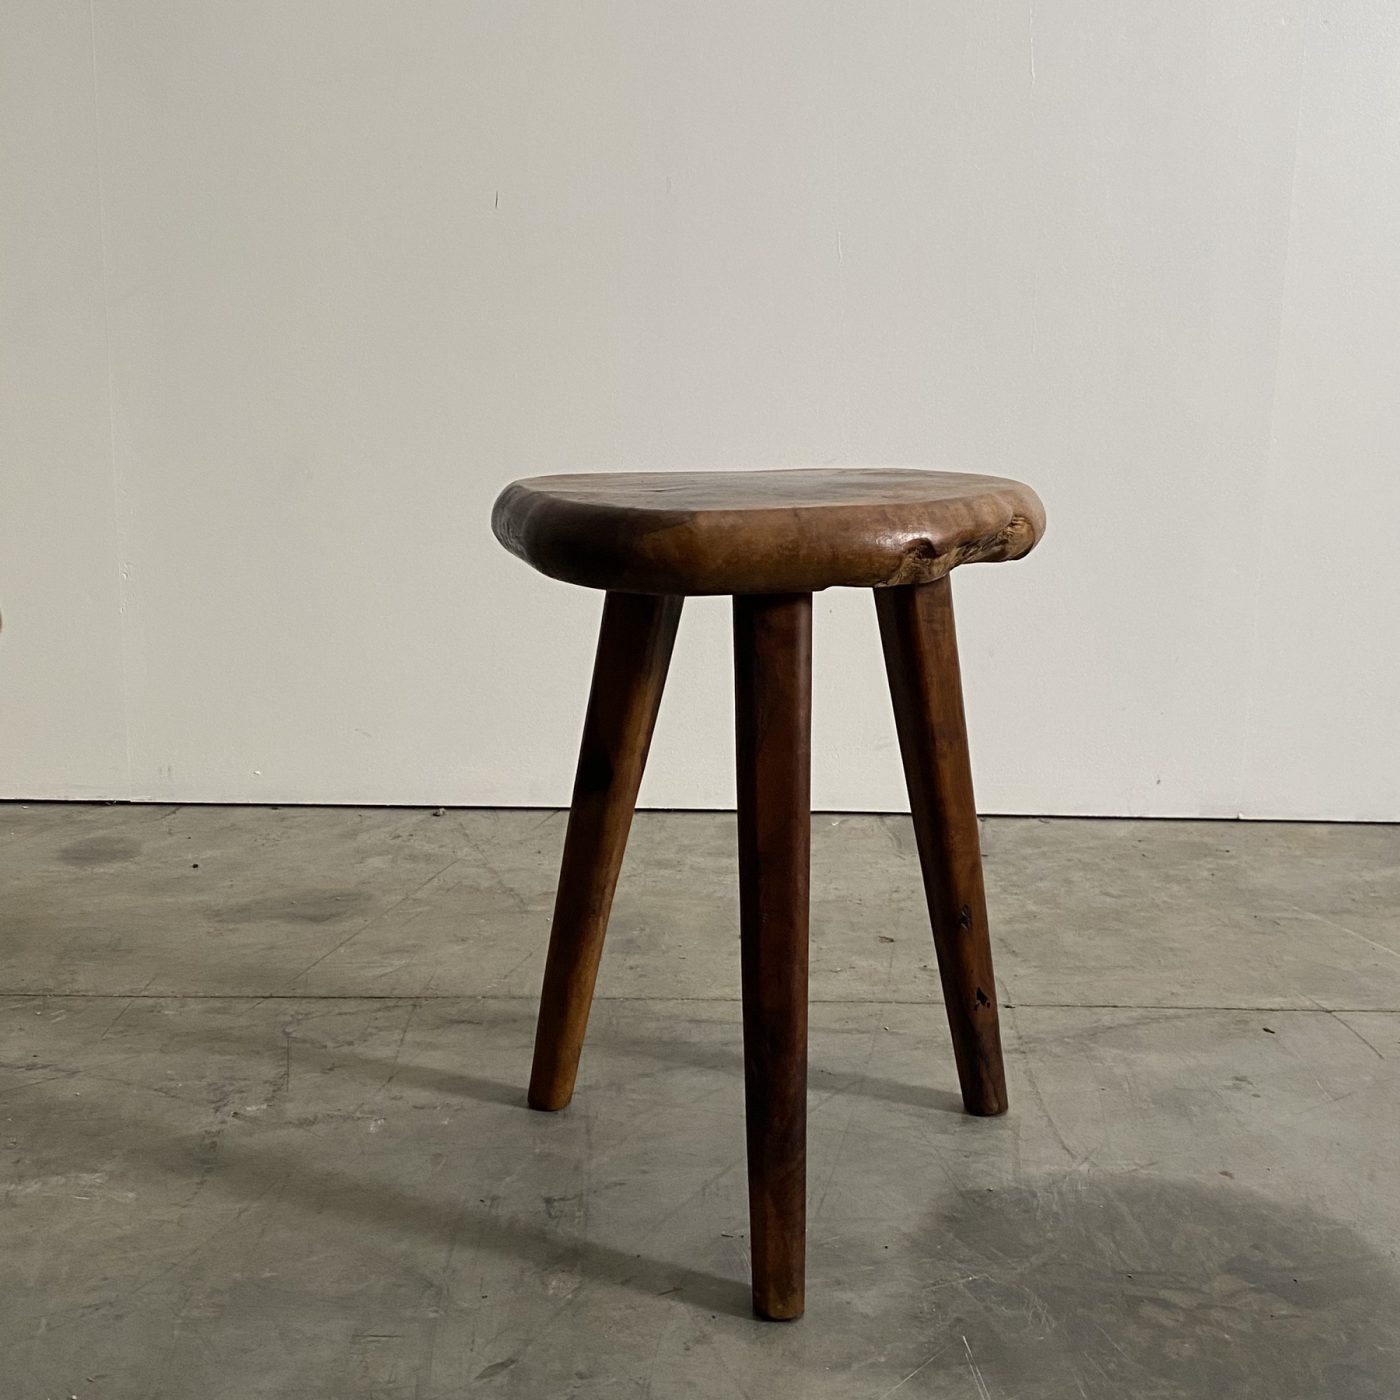 objet-vagabond-olive-stools0002